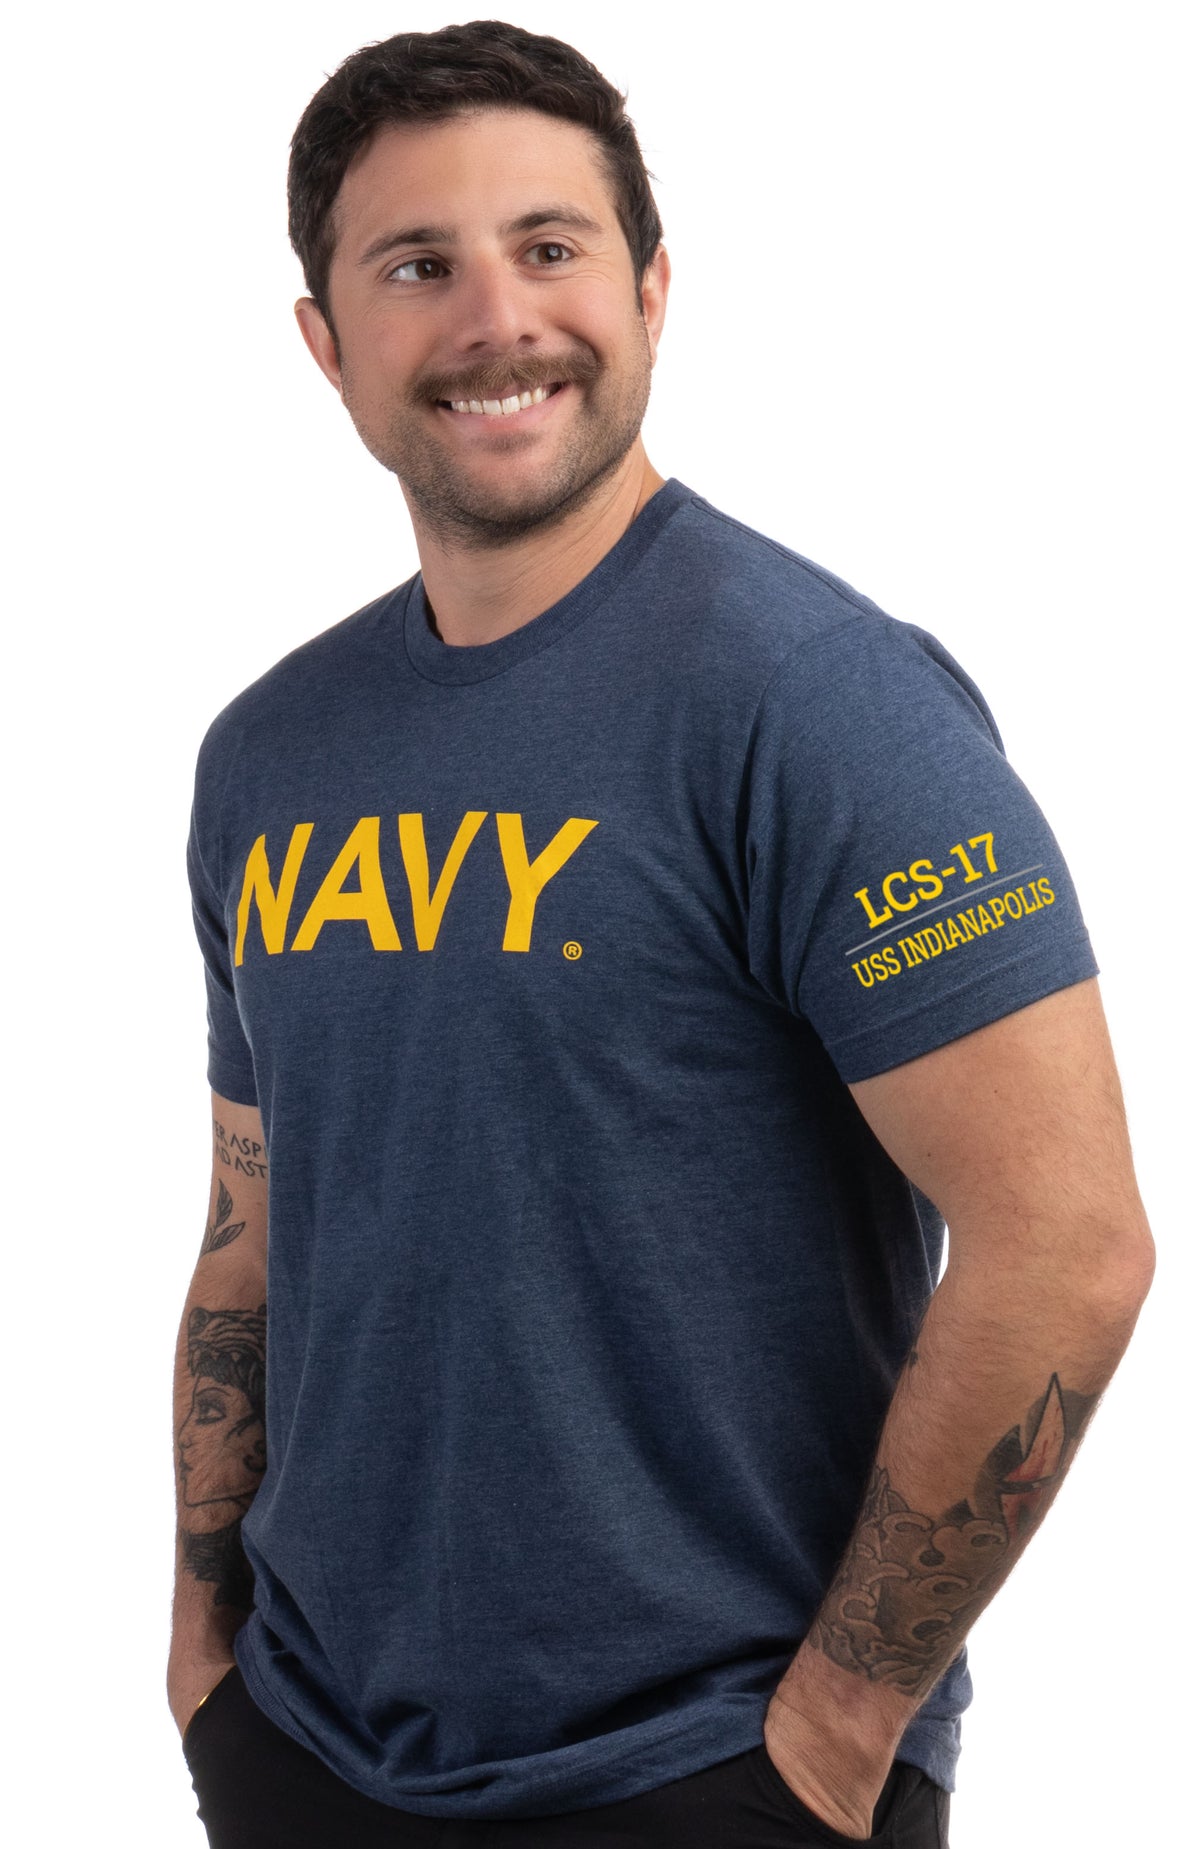 USS Indianapolis, LCS-17 | U.S. Navy Sailor Veteran USN United States Naval T-shirt for Men Women